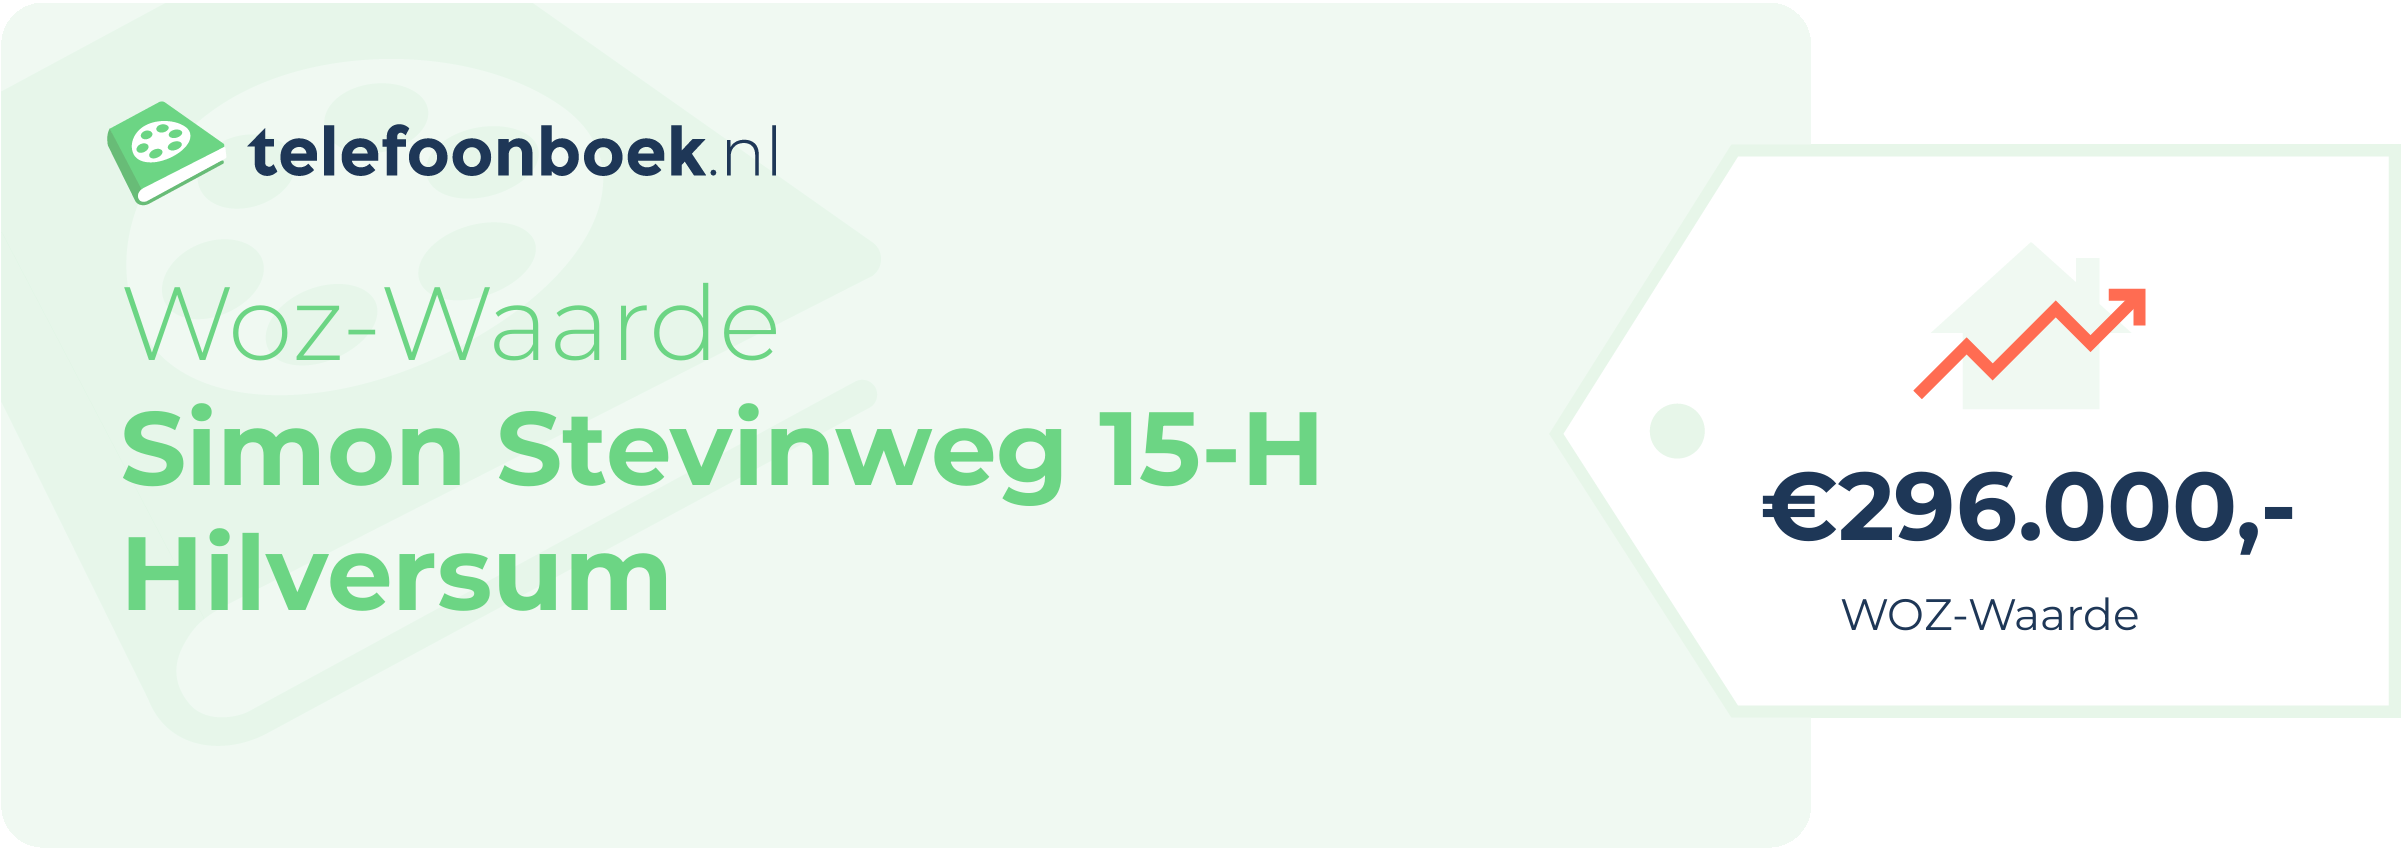 WOZ-waarde Simon Stevinweg 15-H Hilversum